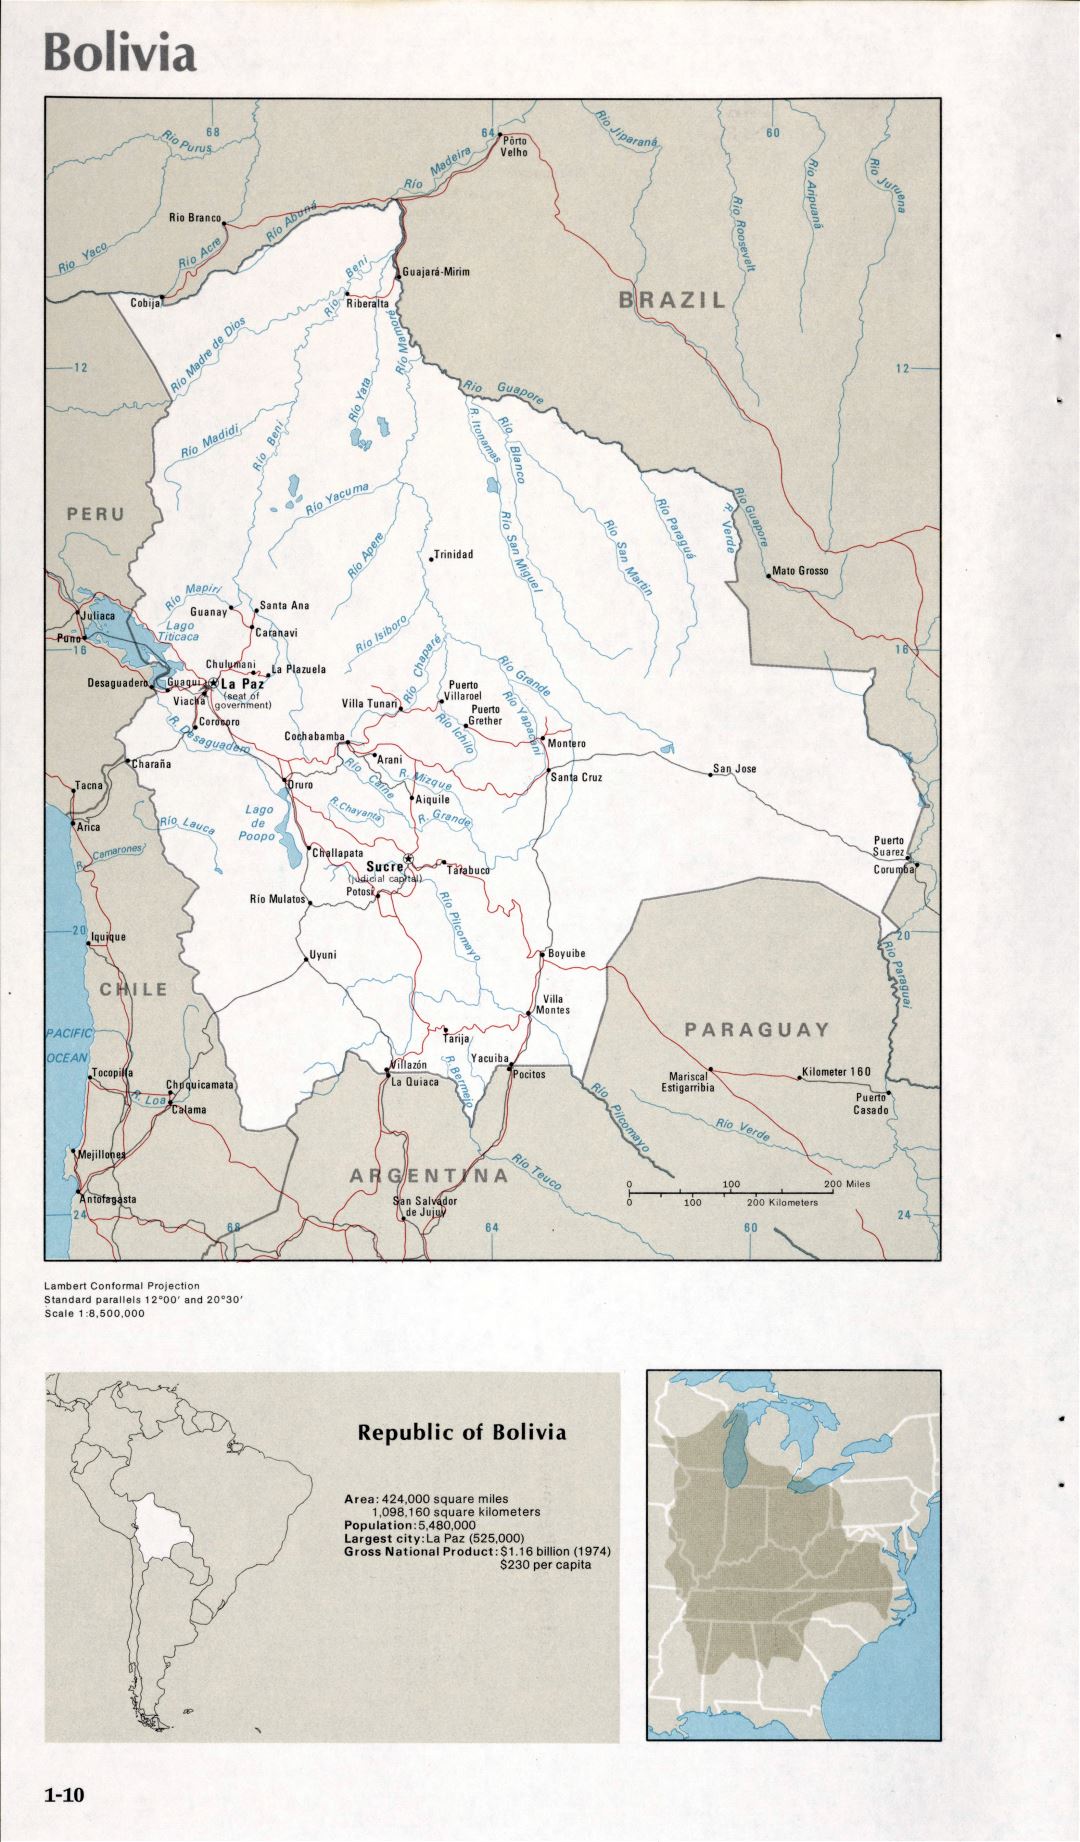 Map of Bolivia (1-10)